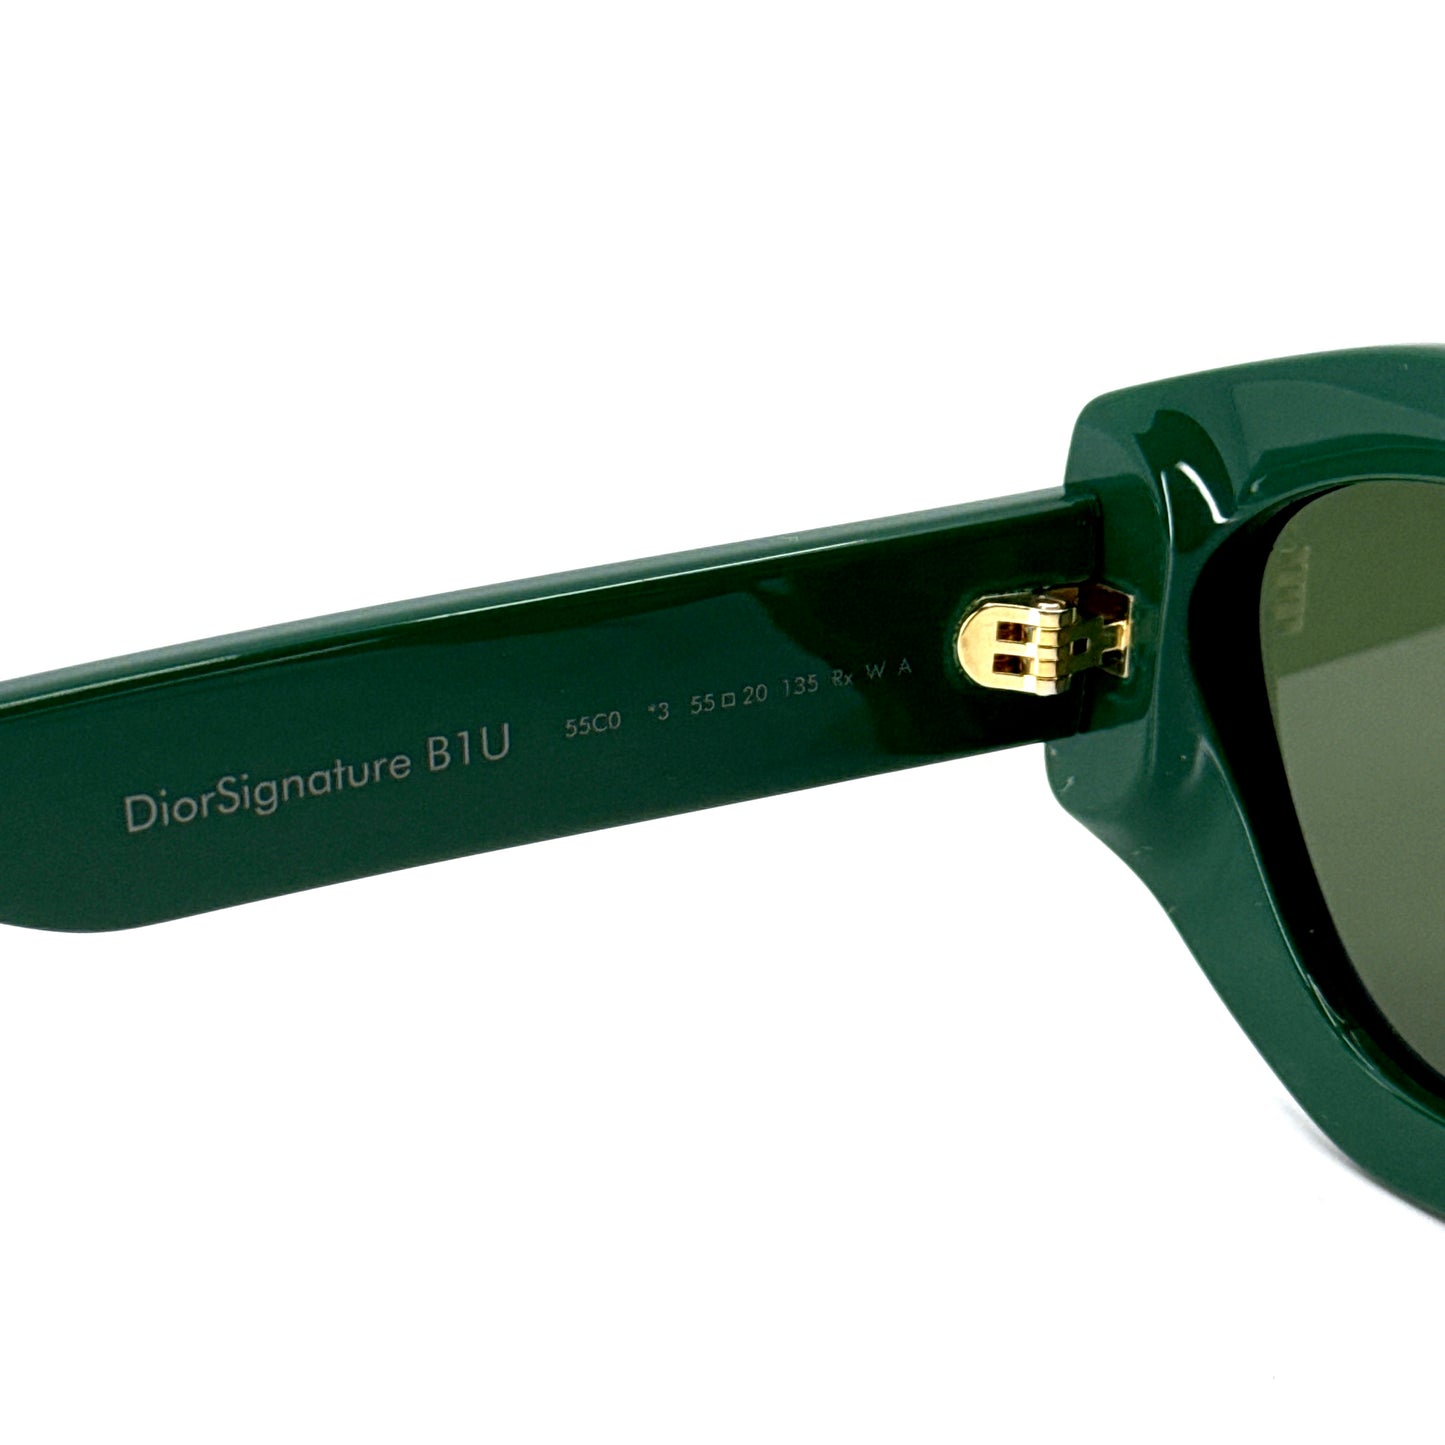 CHRISTIAN DIOR Sunglasses Signature B1U 55C0